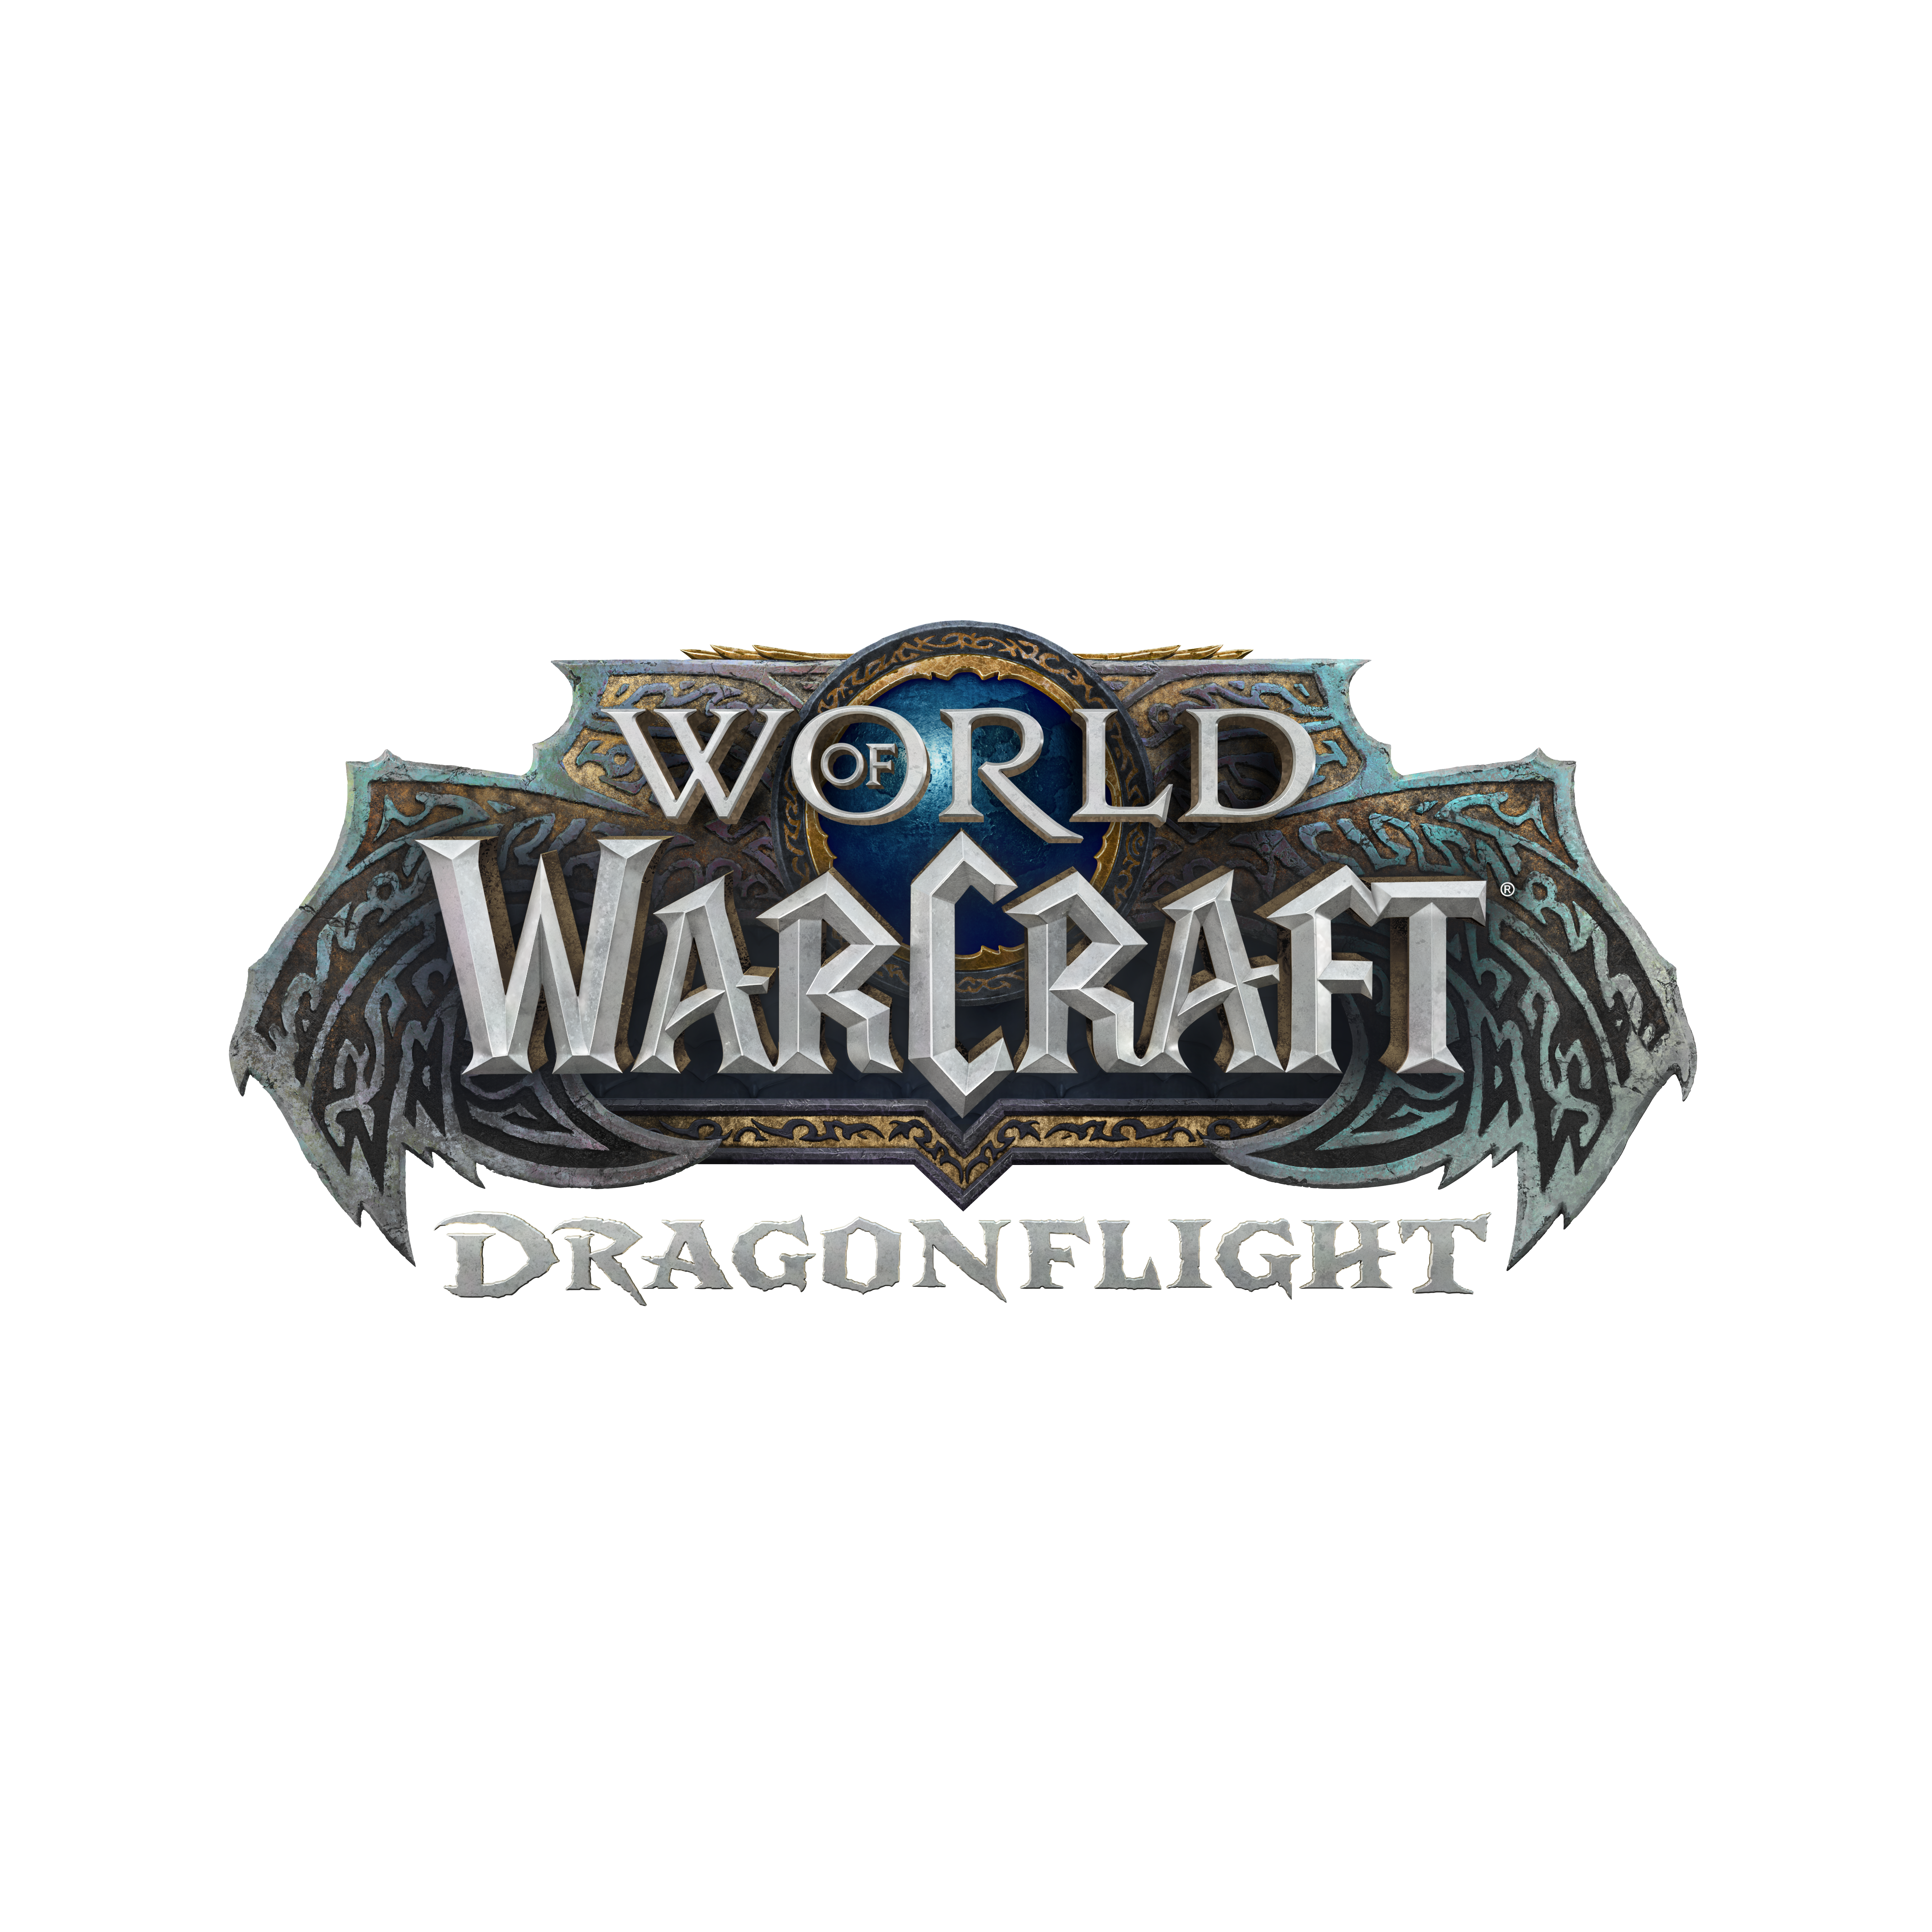 General 7680x7680 World of Warcraft logo video games simple background minimalism Blizzard Entertainment